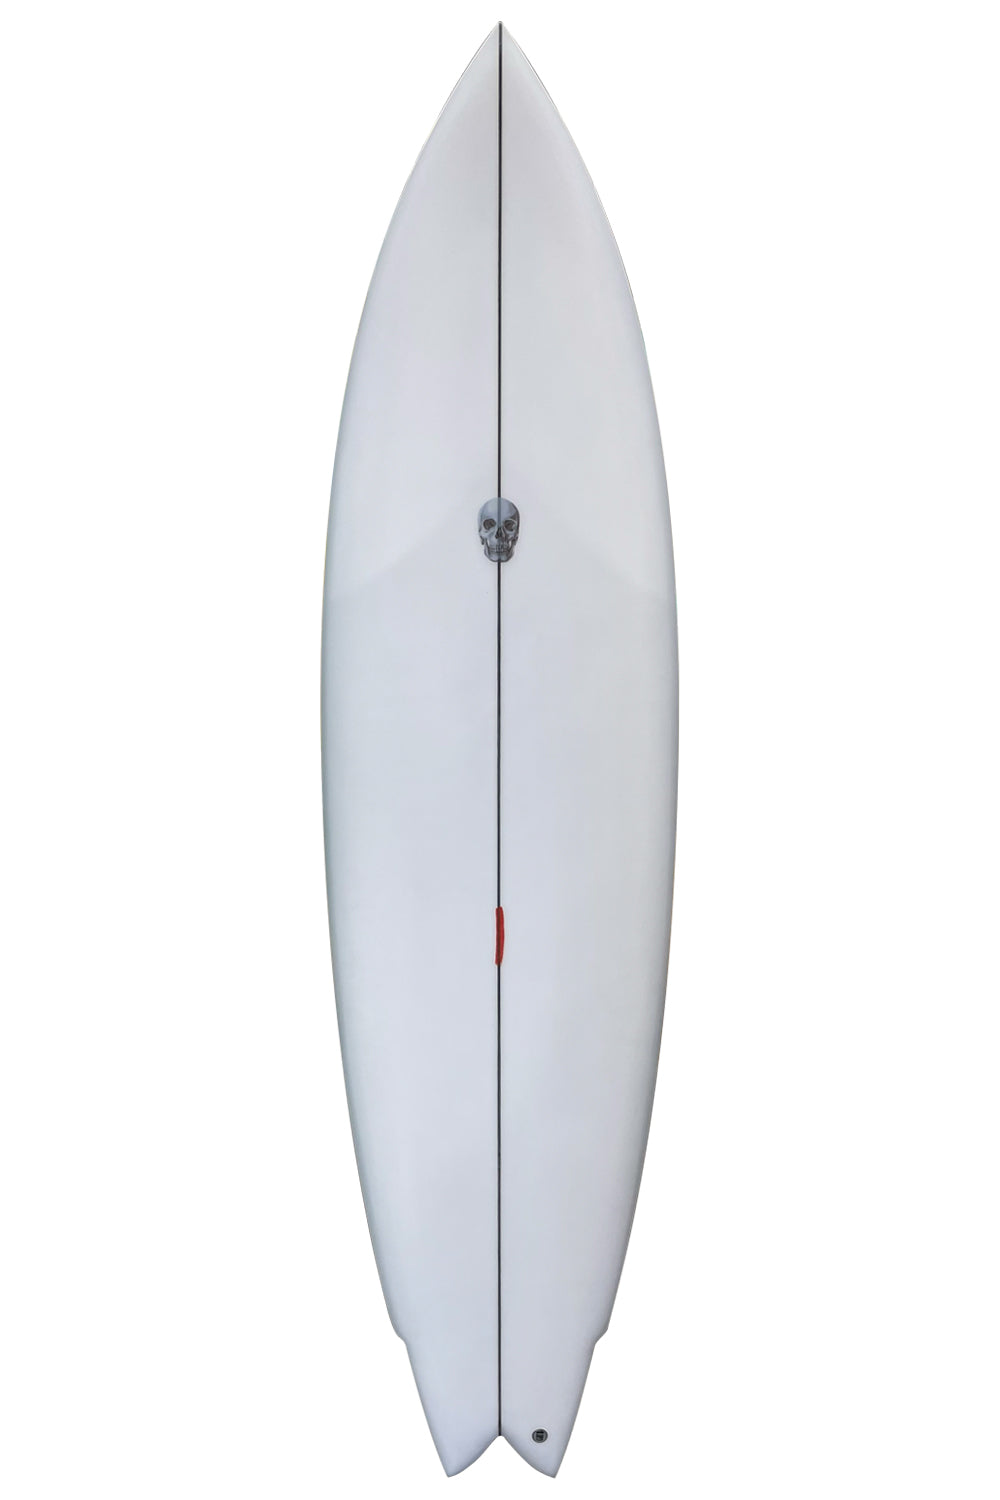 Chris Christenson Wolverine Surfboard